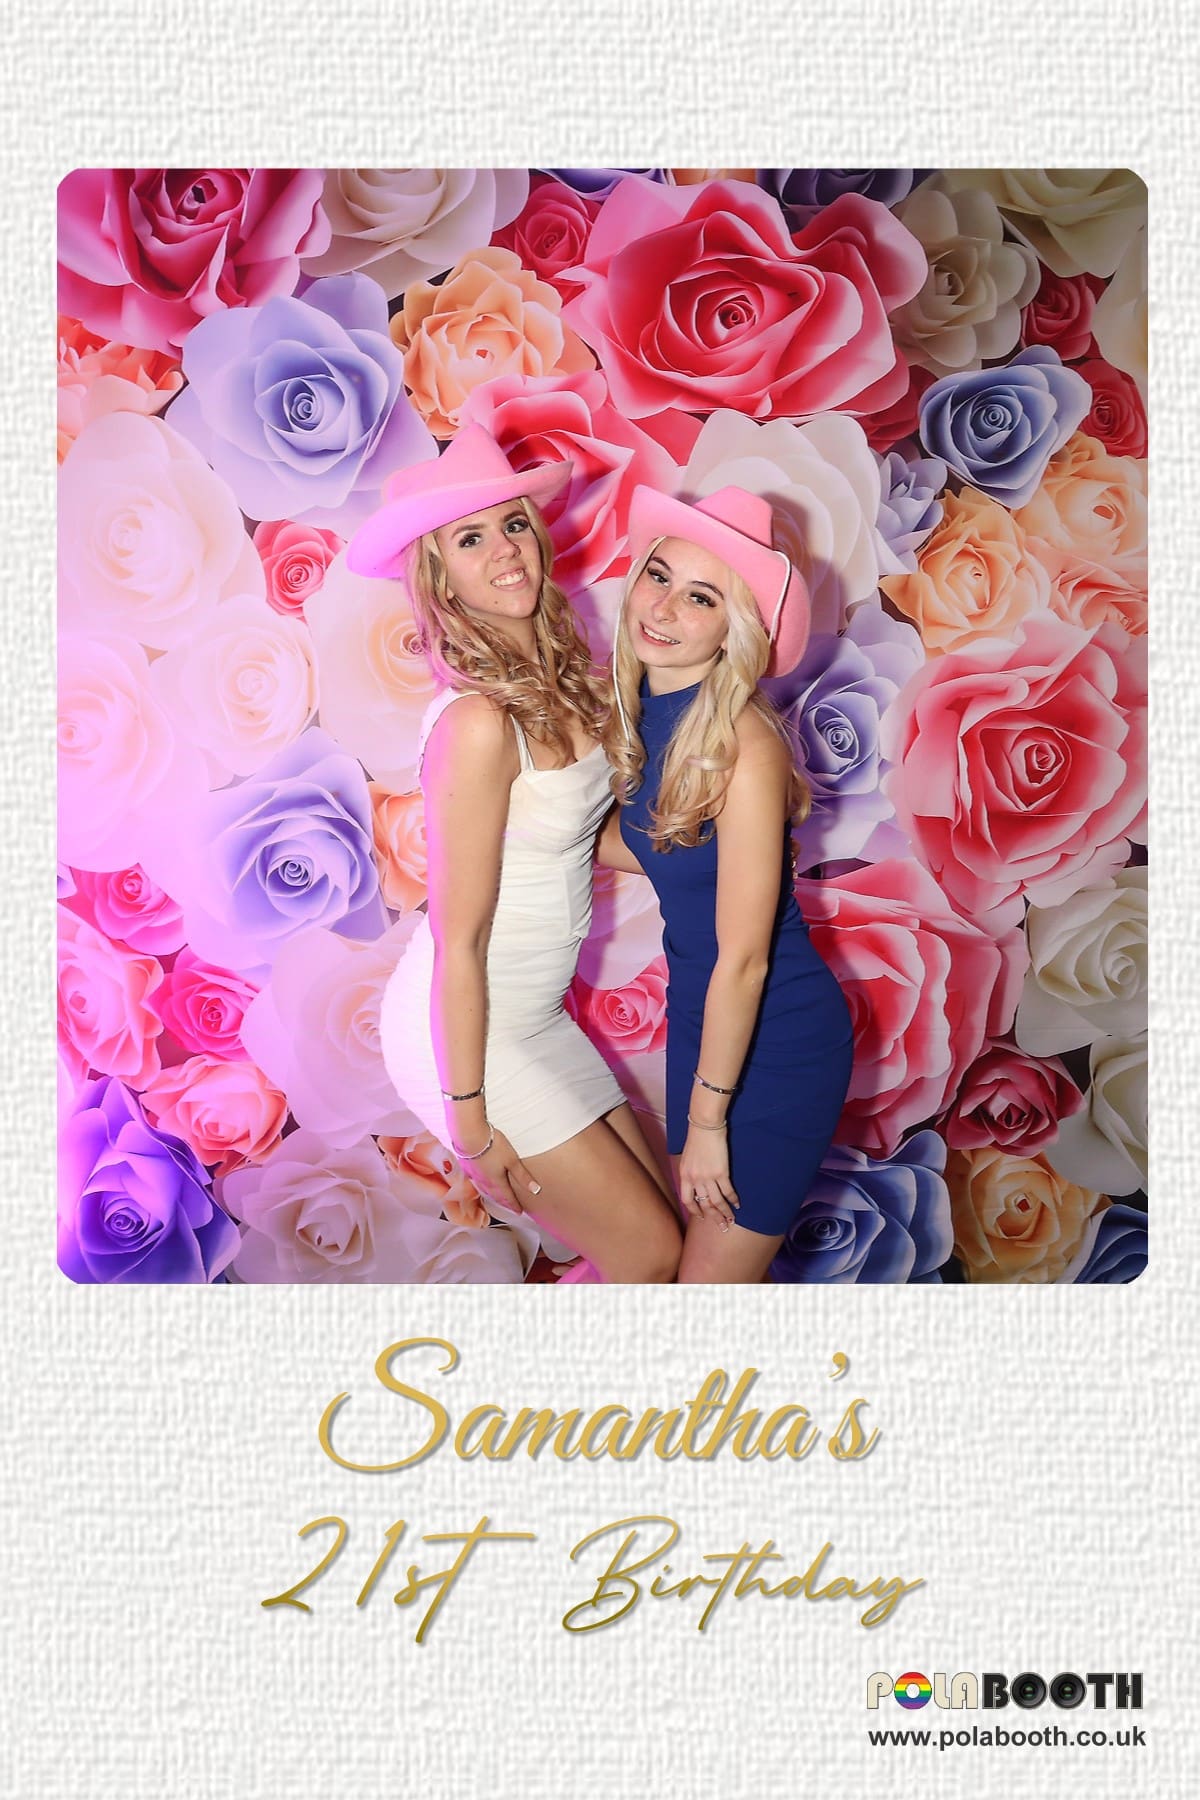 Samantha's Birthday Party Photobooth Hire